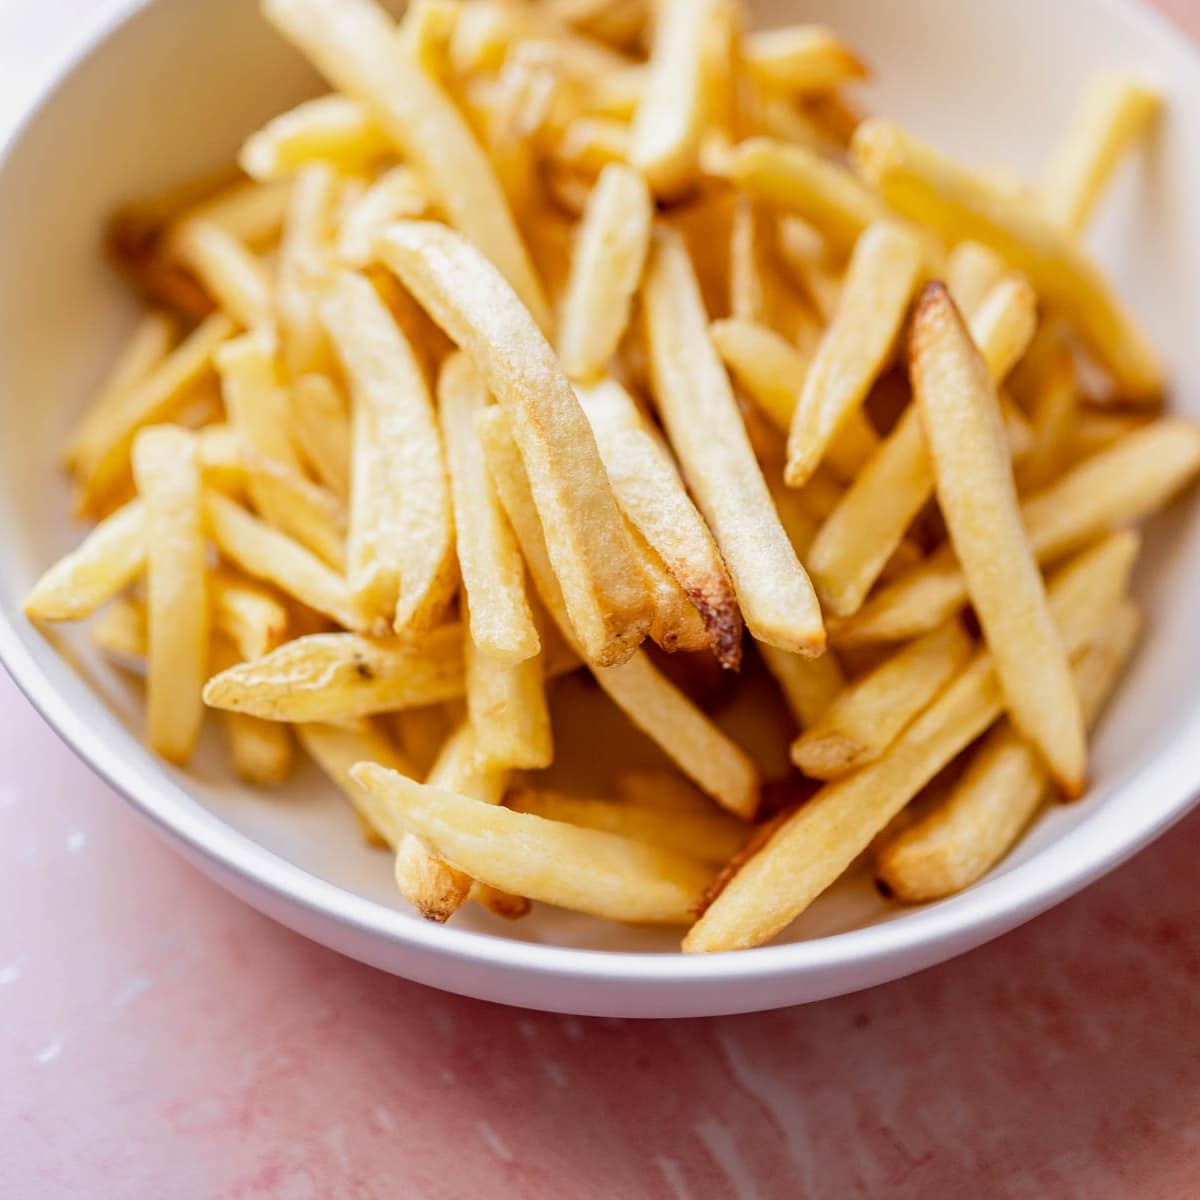 A bowl of golden, air fryer frozen french fries.